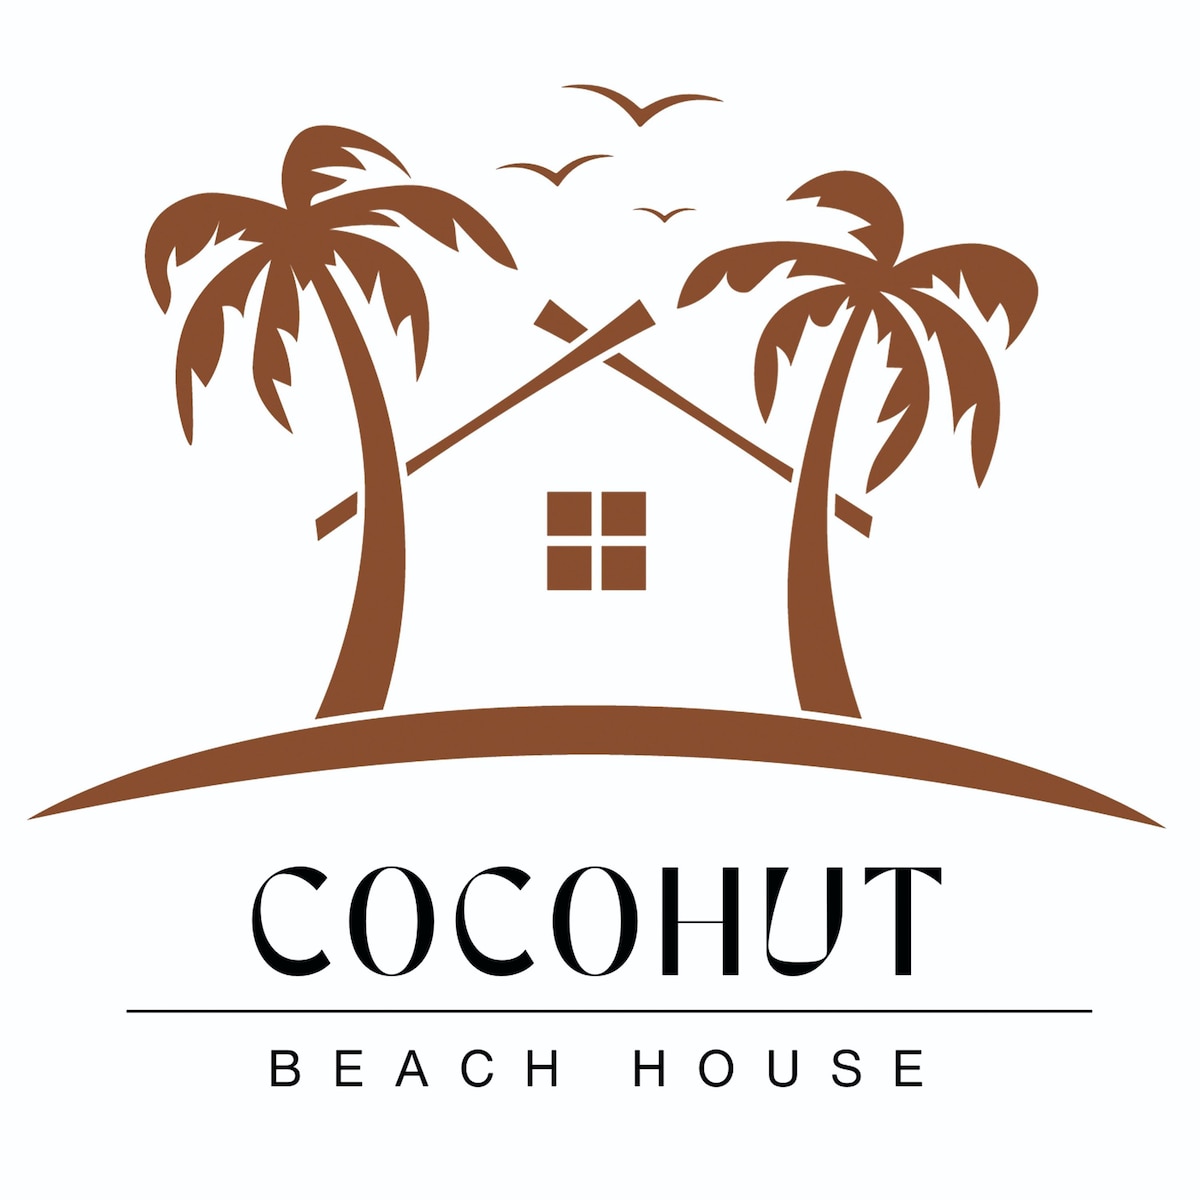 Cocohut Beach House